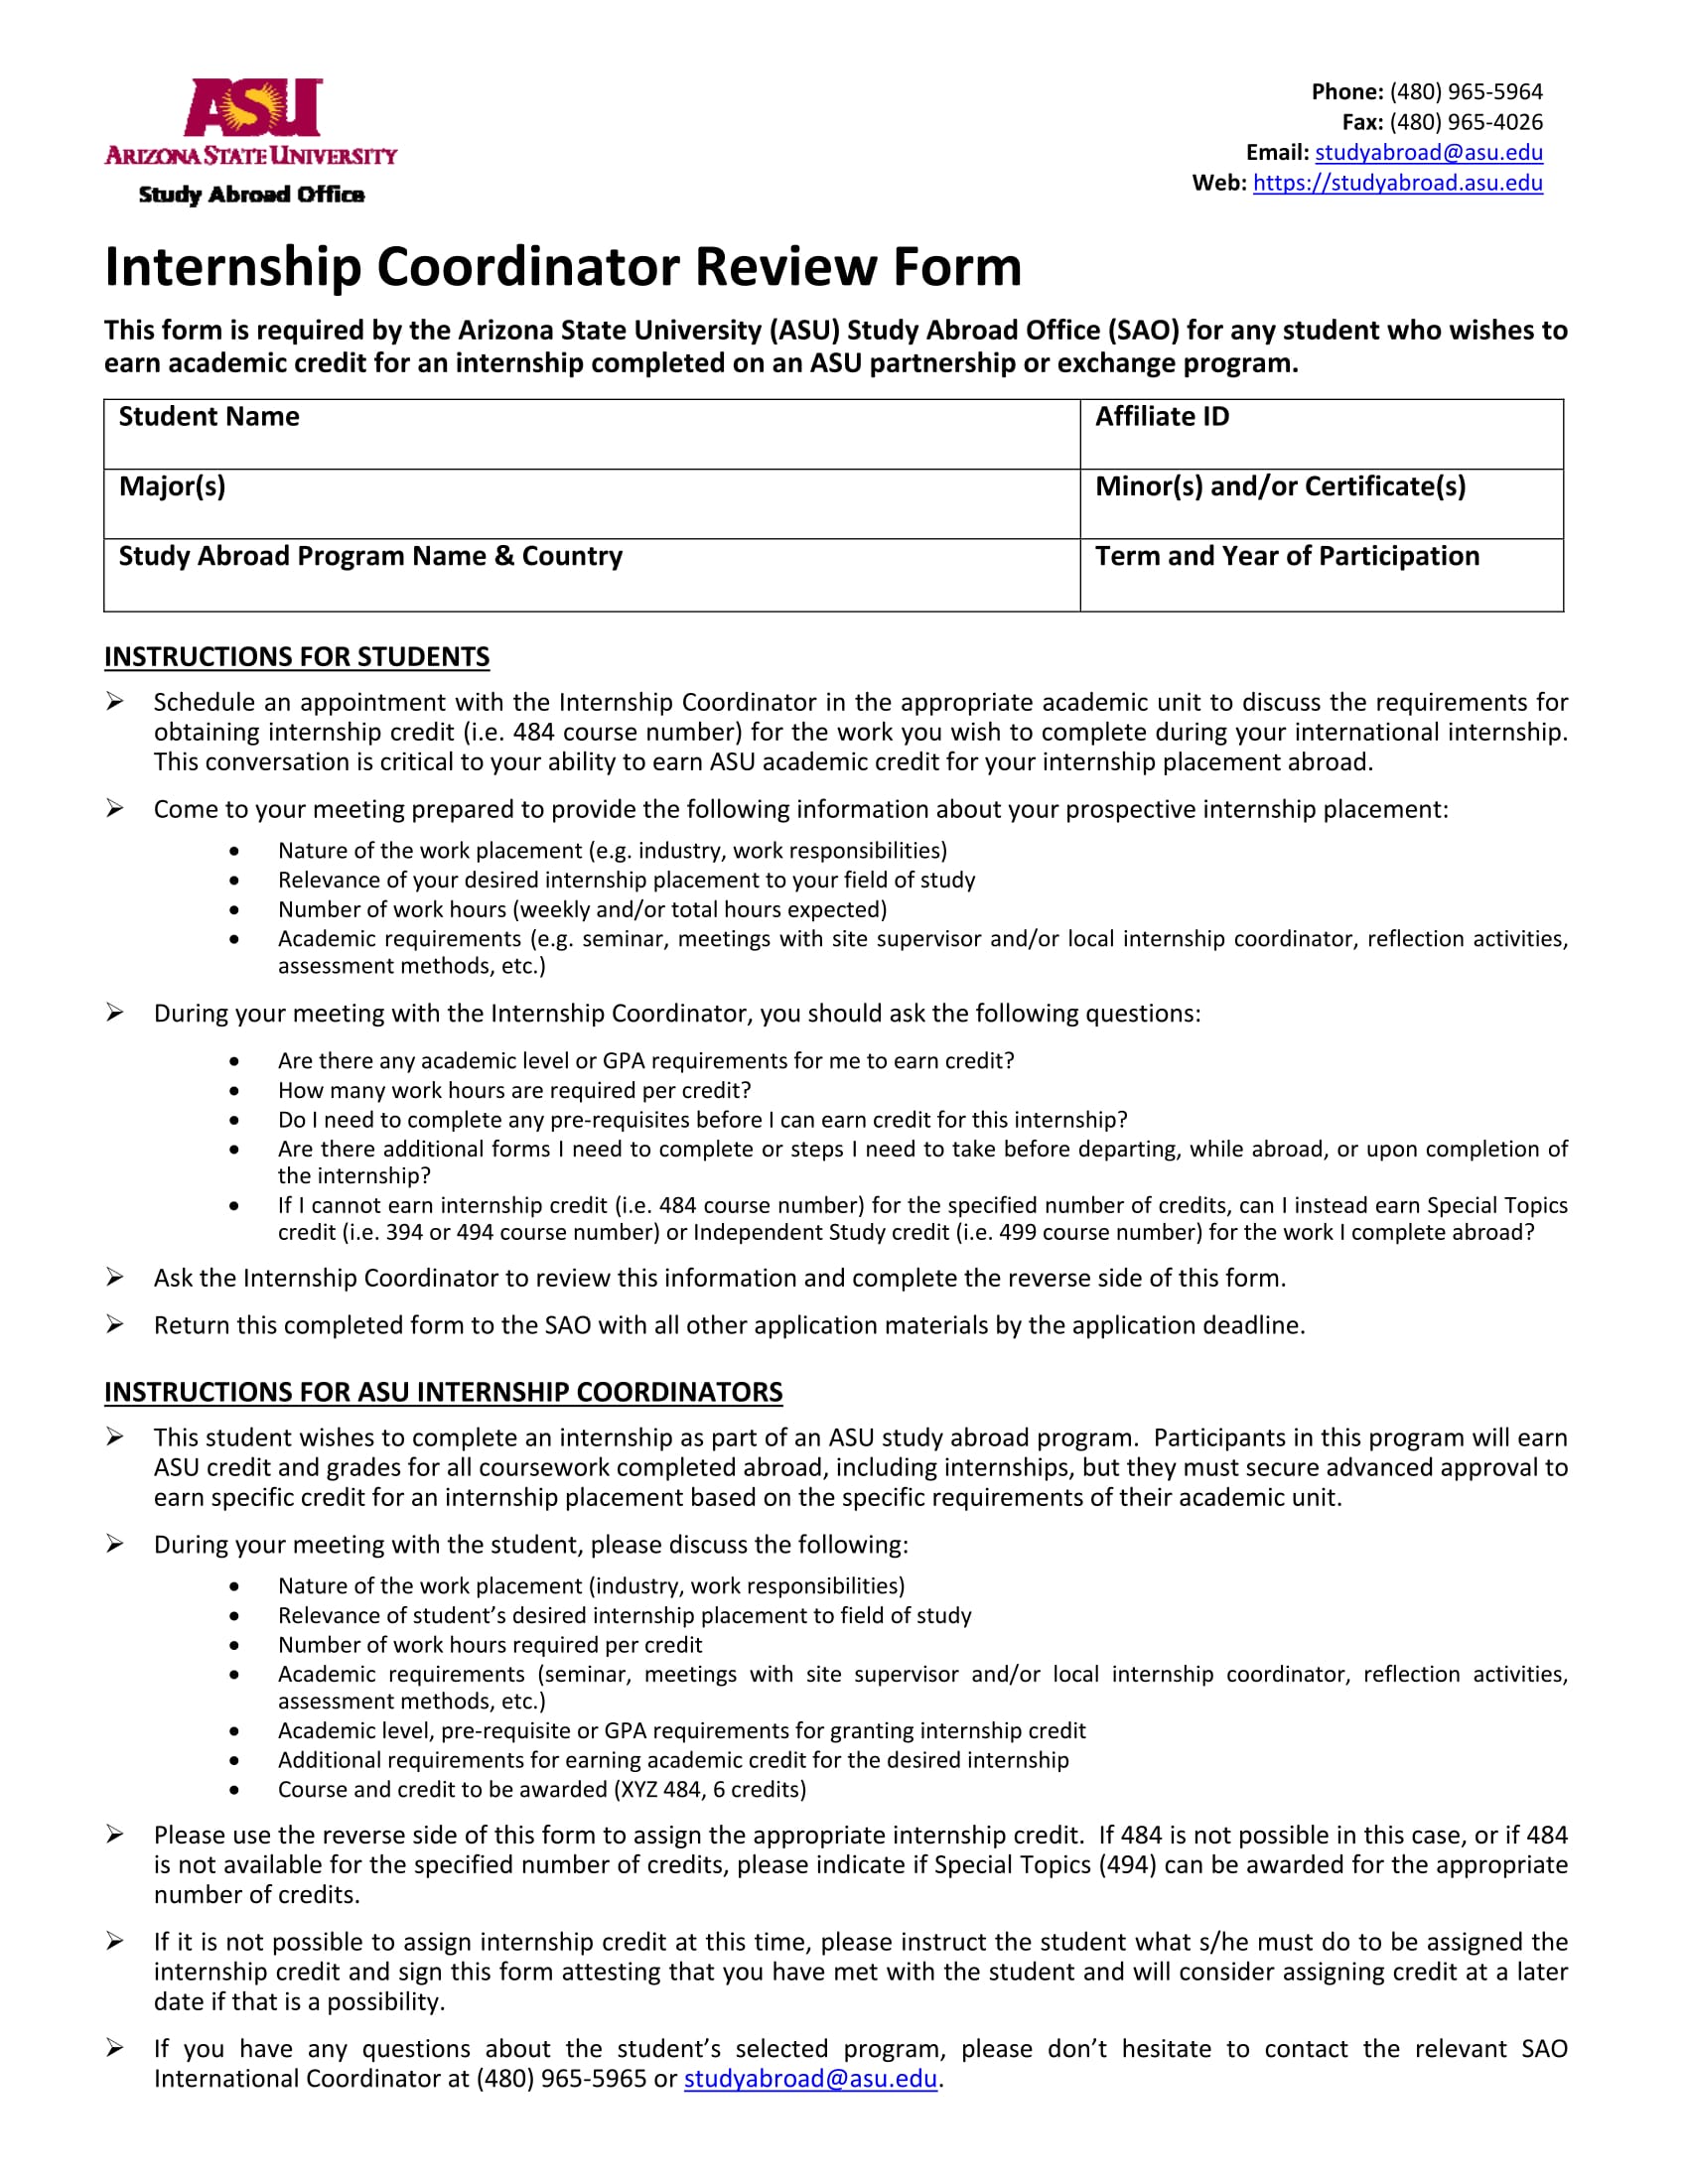 internship coordinator review form 1